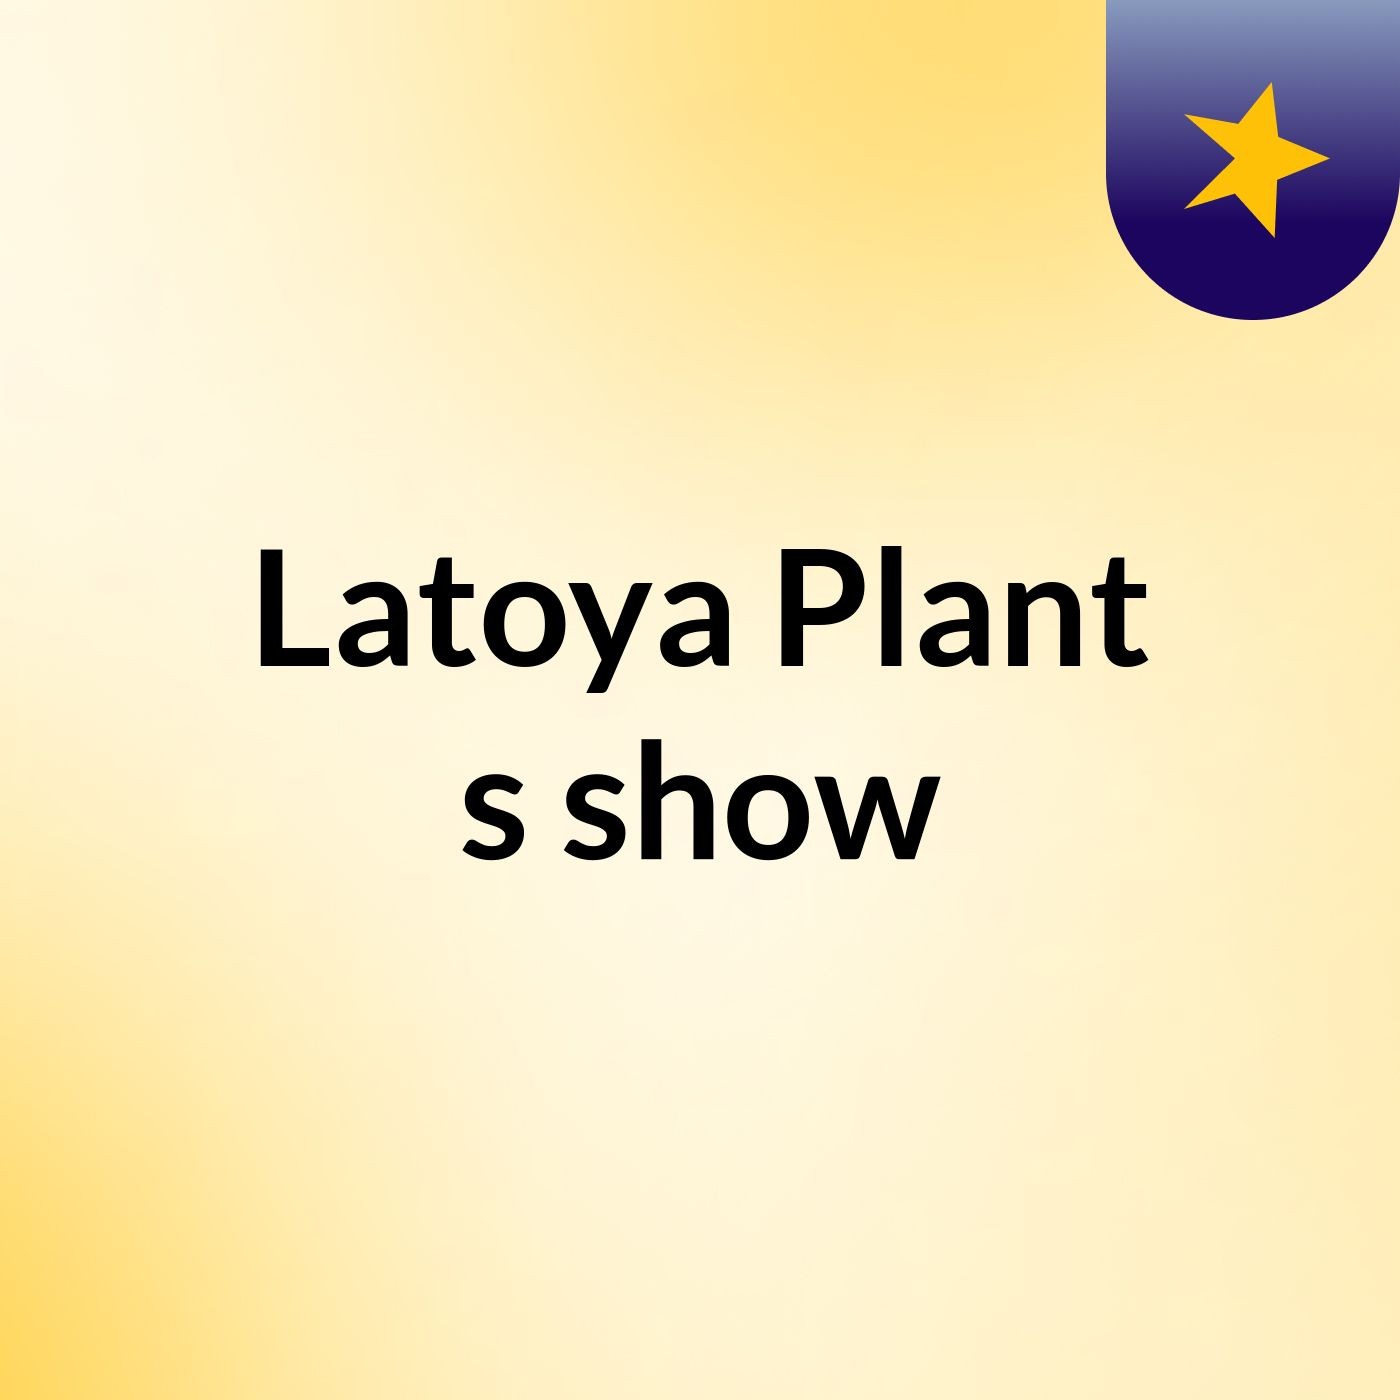 Latoya Plant's show